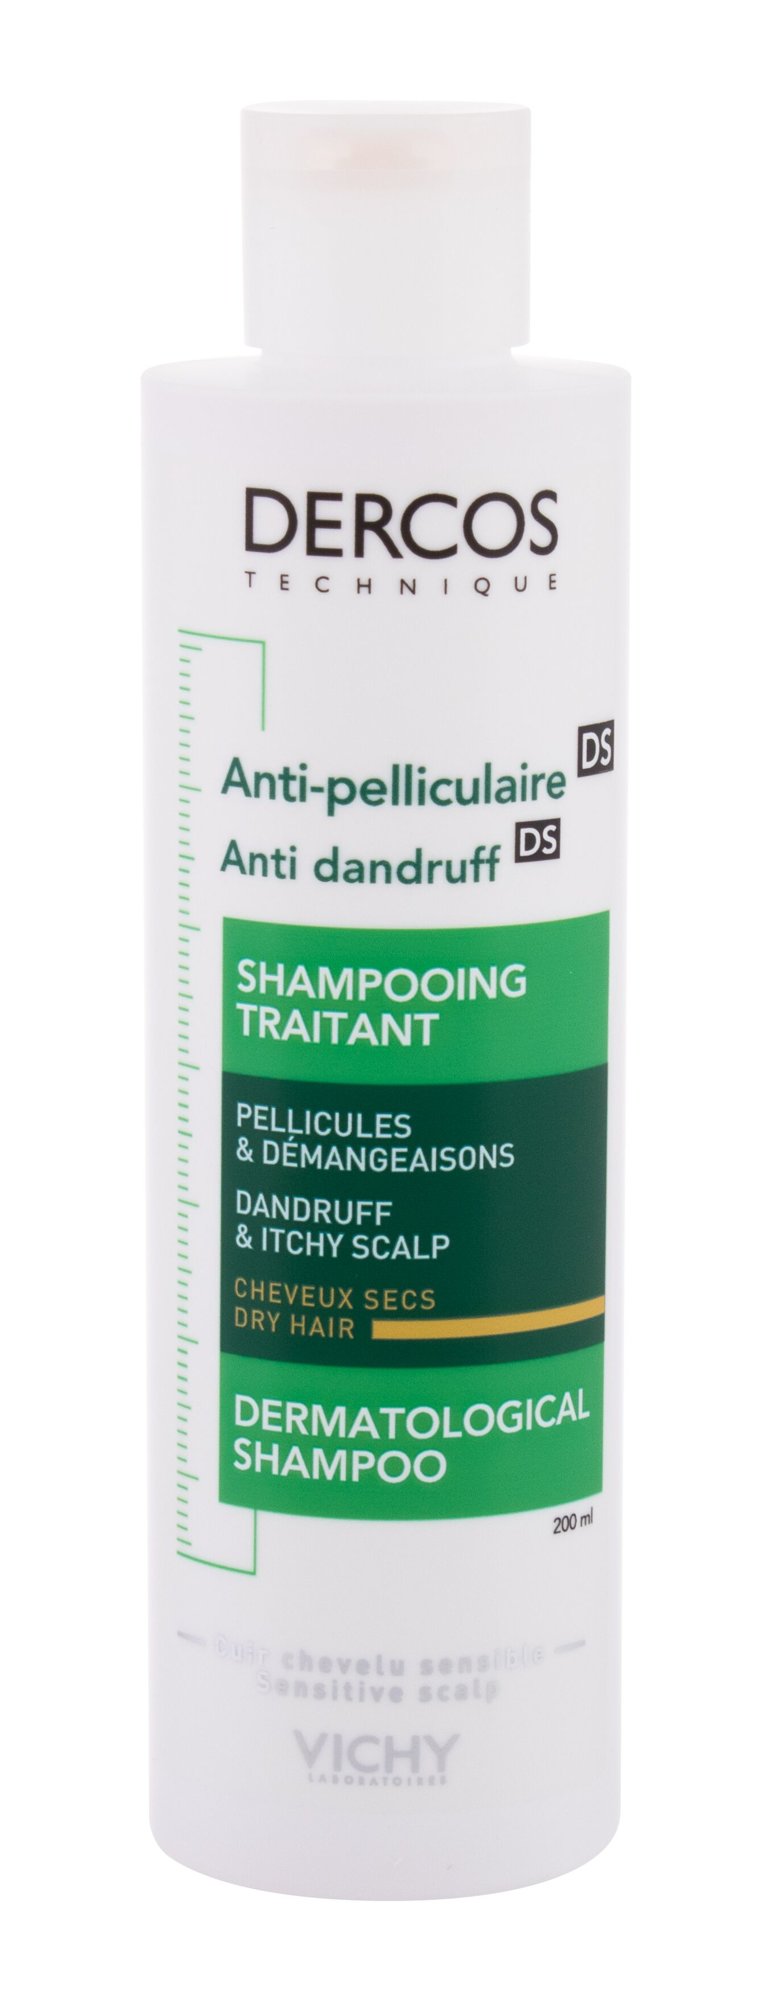 Vichy Dercos Anti-Dandruff Advanced Action šampūnas